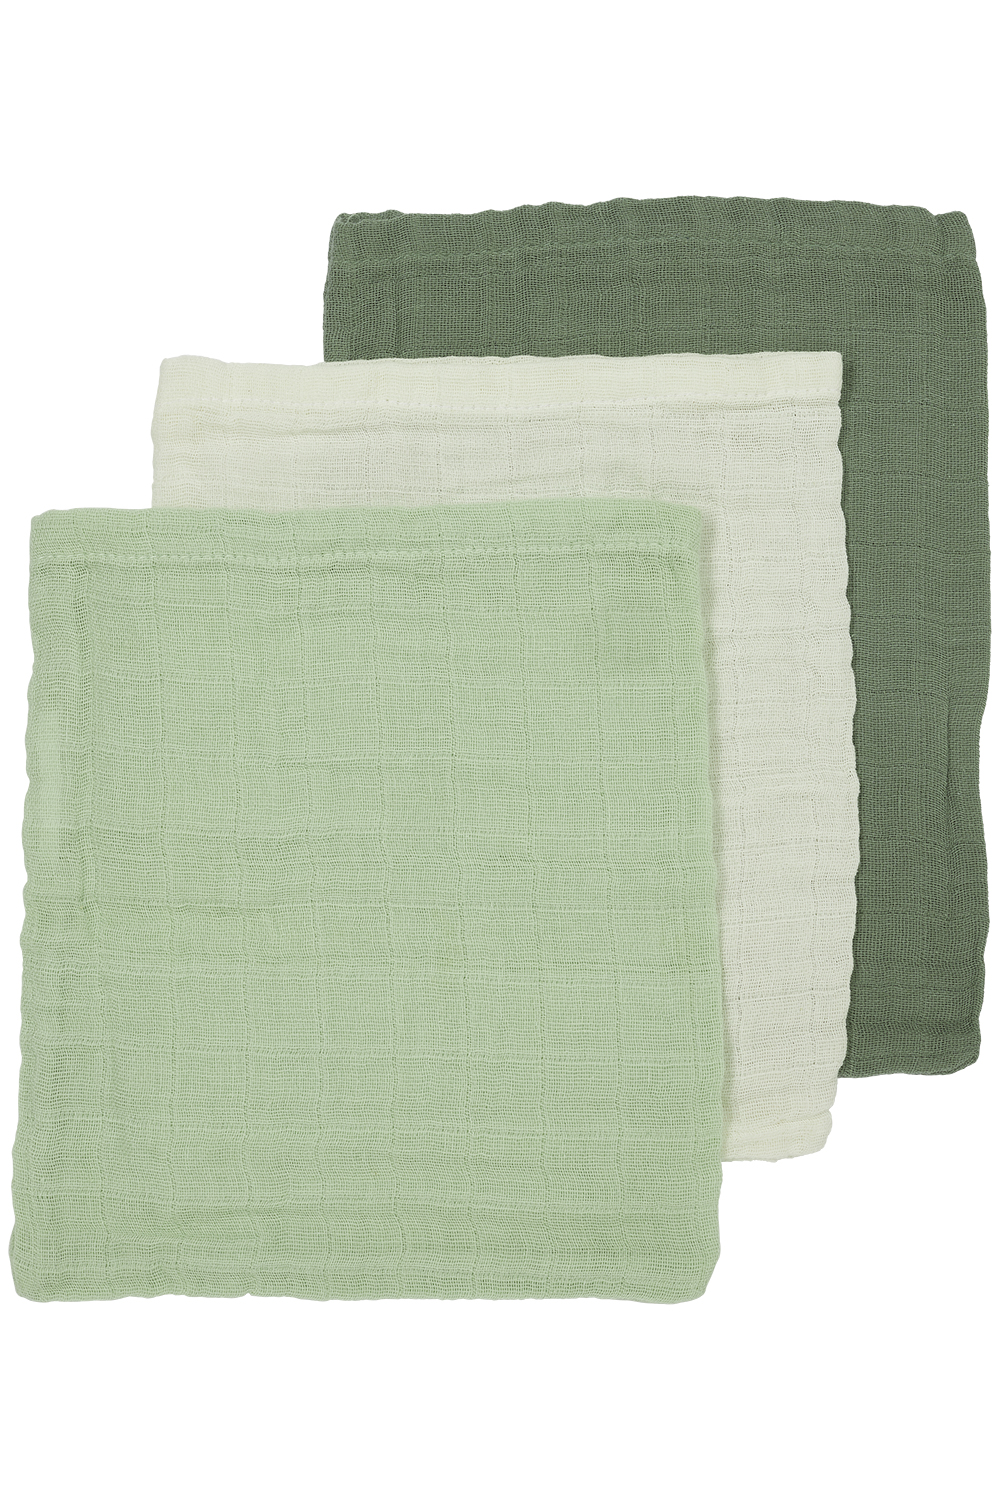 Washandjes 3-pack pre-washed hydrofiel Uni - offwhite/soft green/forest green - 20x17cm